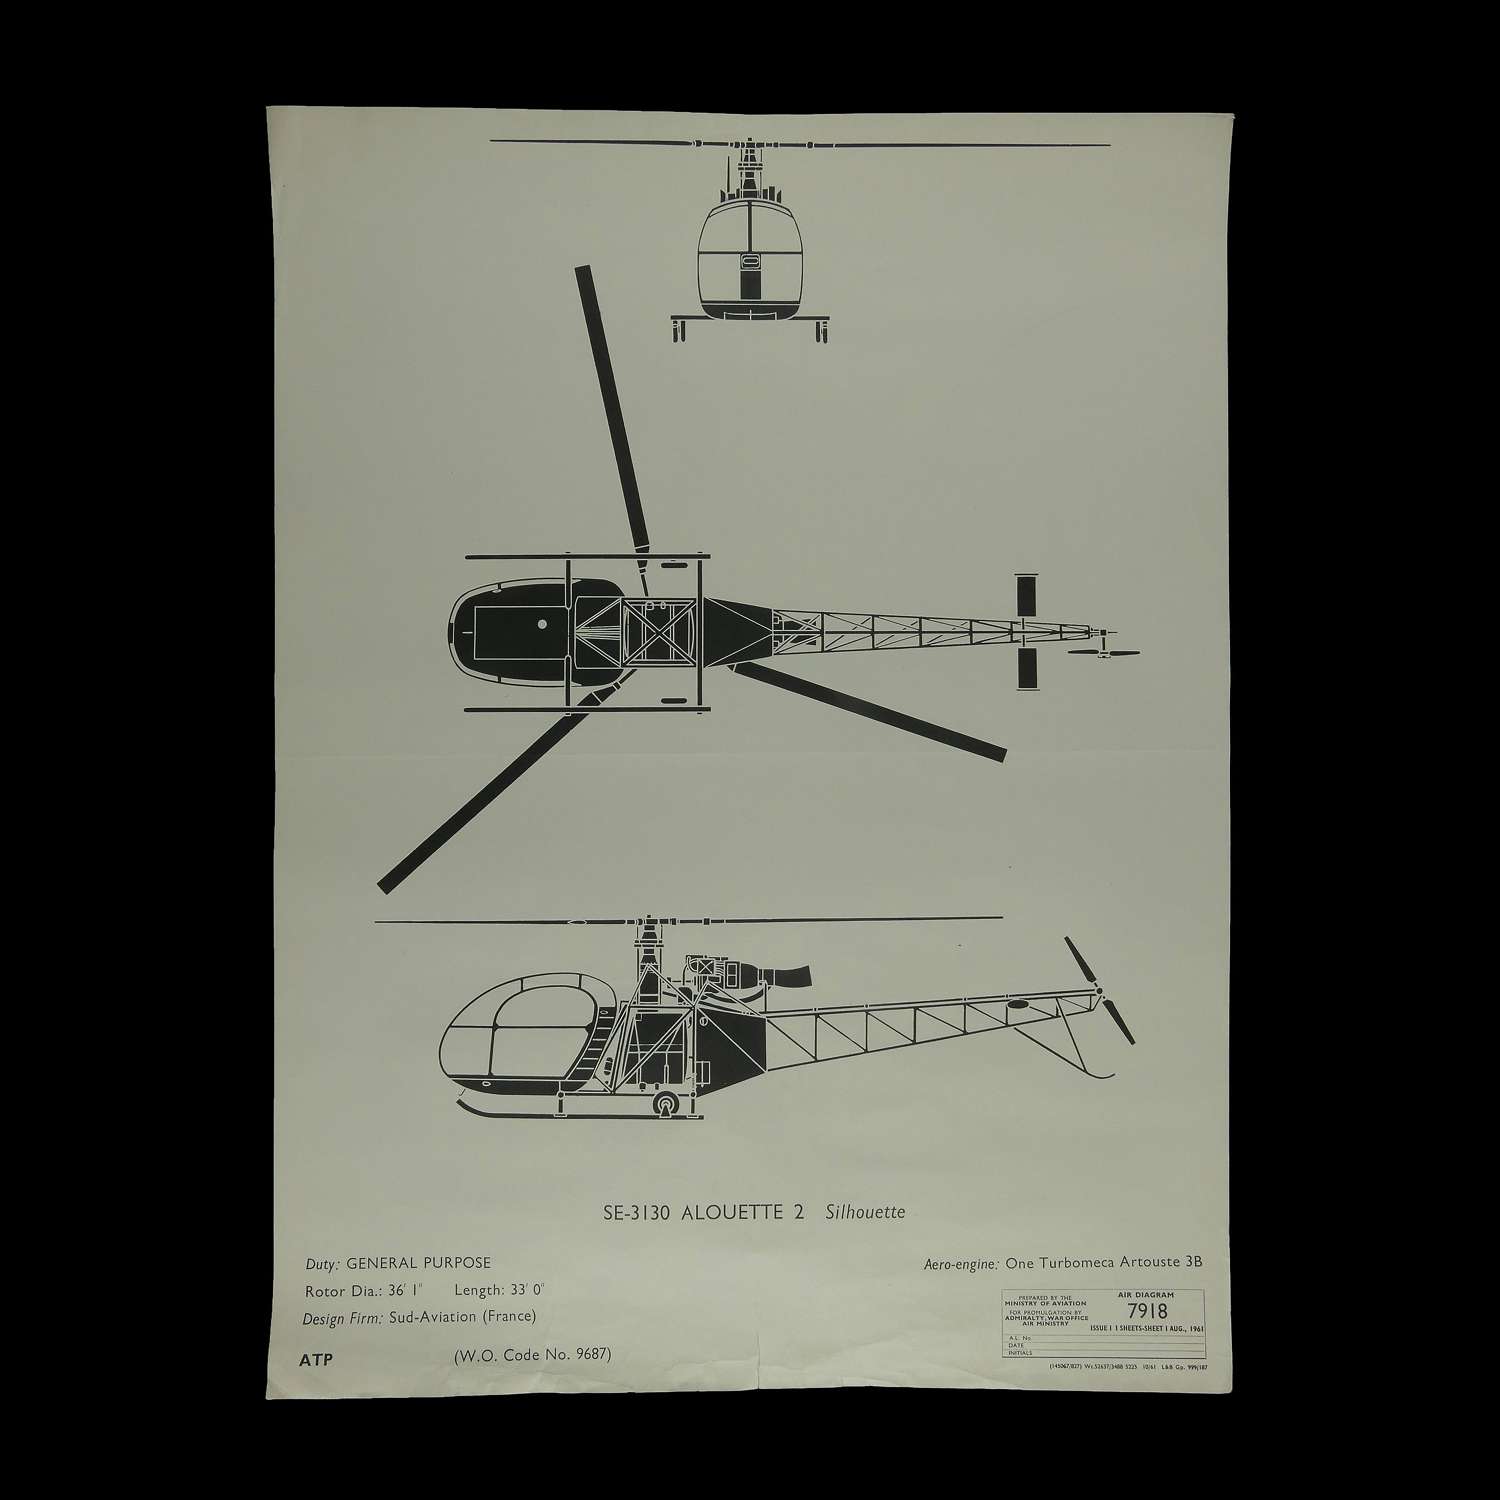 RAF Air Diagram - SE-3130 Alouette 2